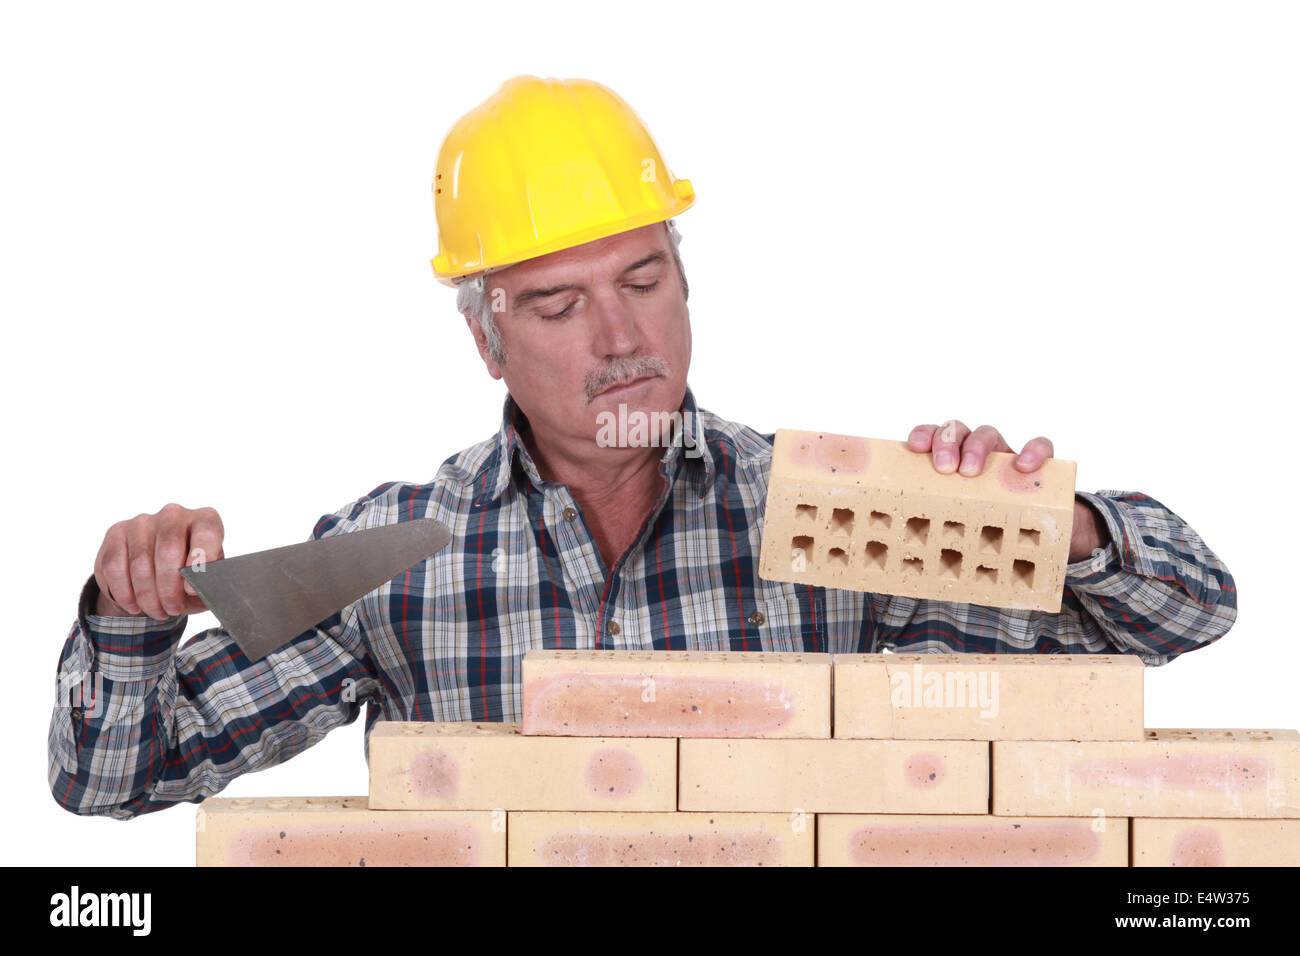 Bricklayer laying bricks Stock Photo